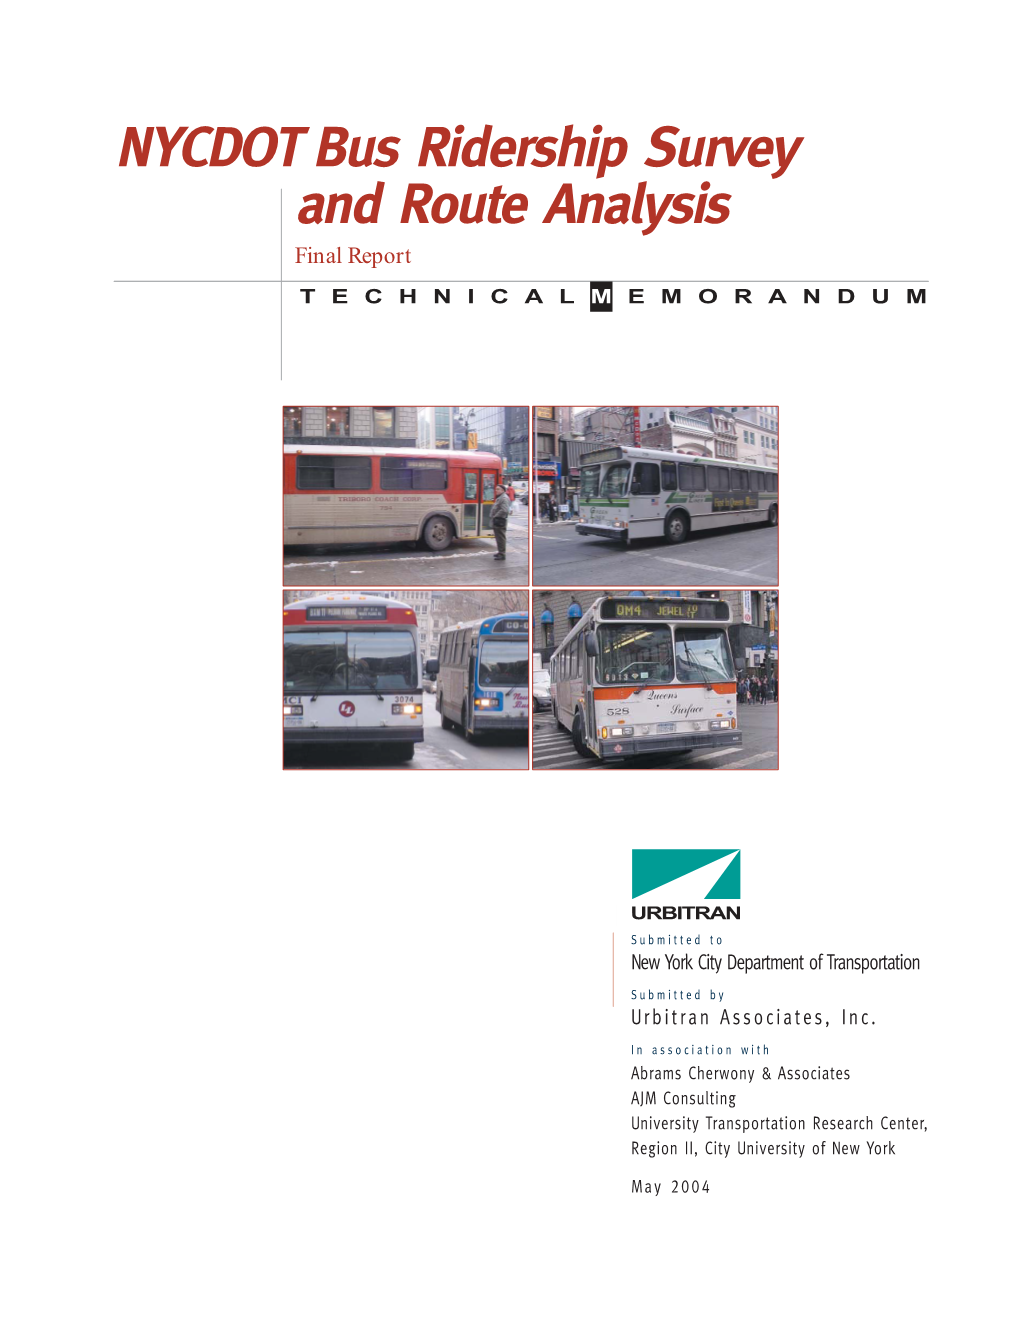 NYCDOT Bus Ridership Survey and Route Analysis Final Report TECHNICALM EMORANDUM